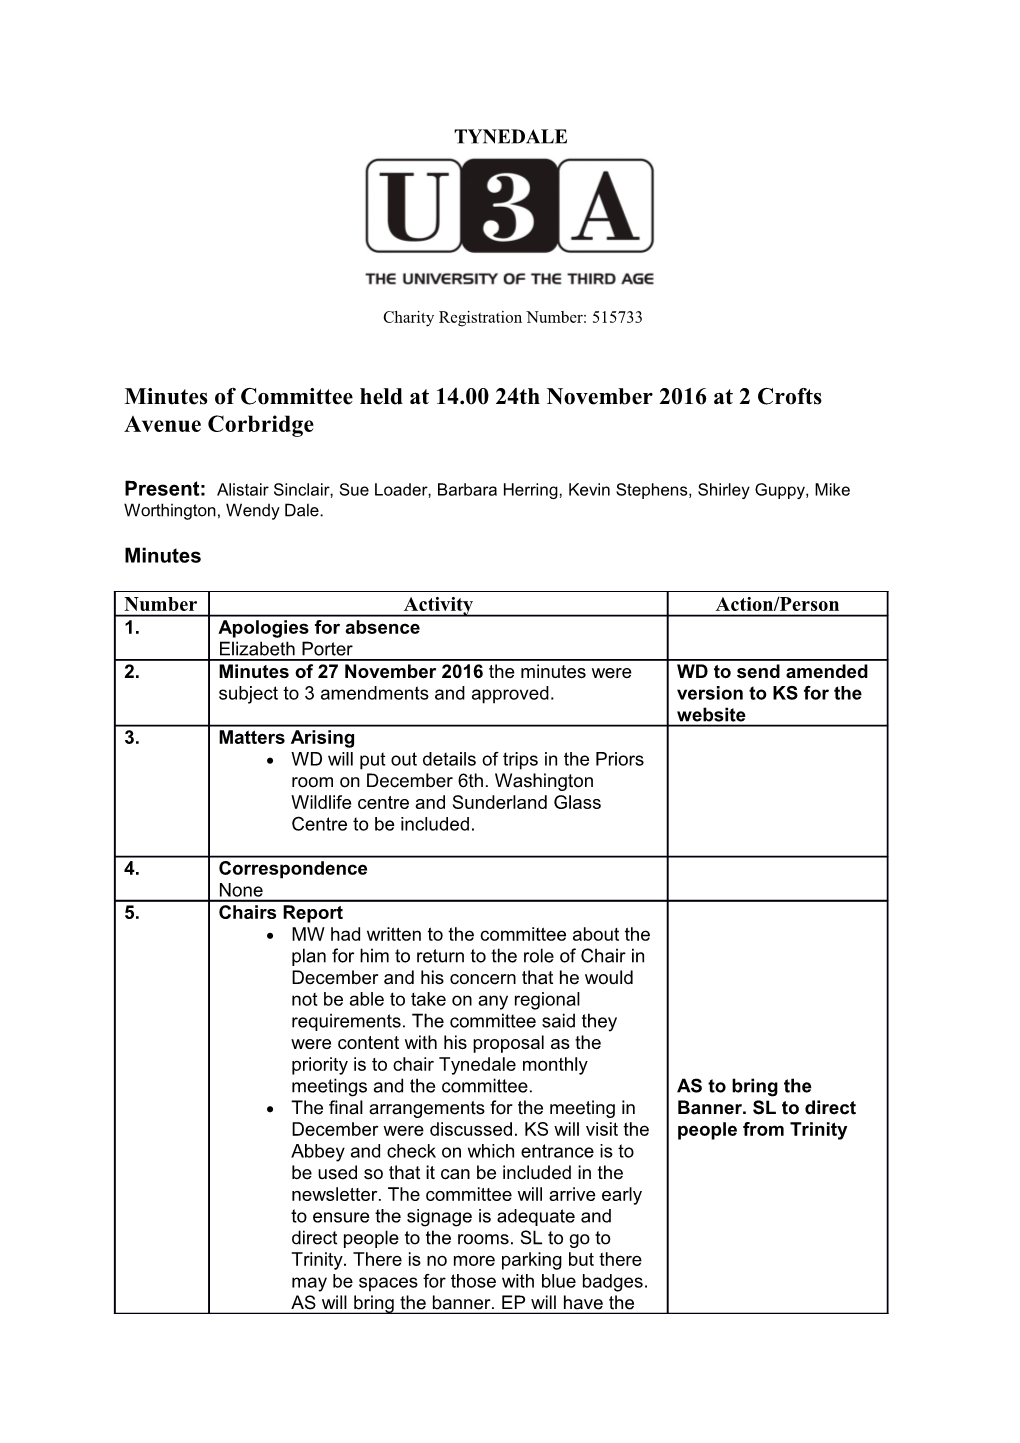 Minutes of Committee Held at 14.0024Thnovember 2016 at 2Croftsavenuecorbridge